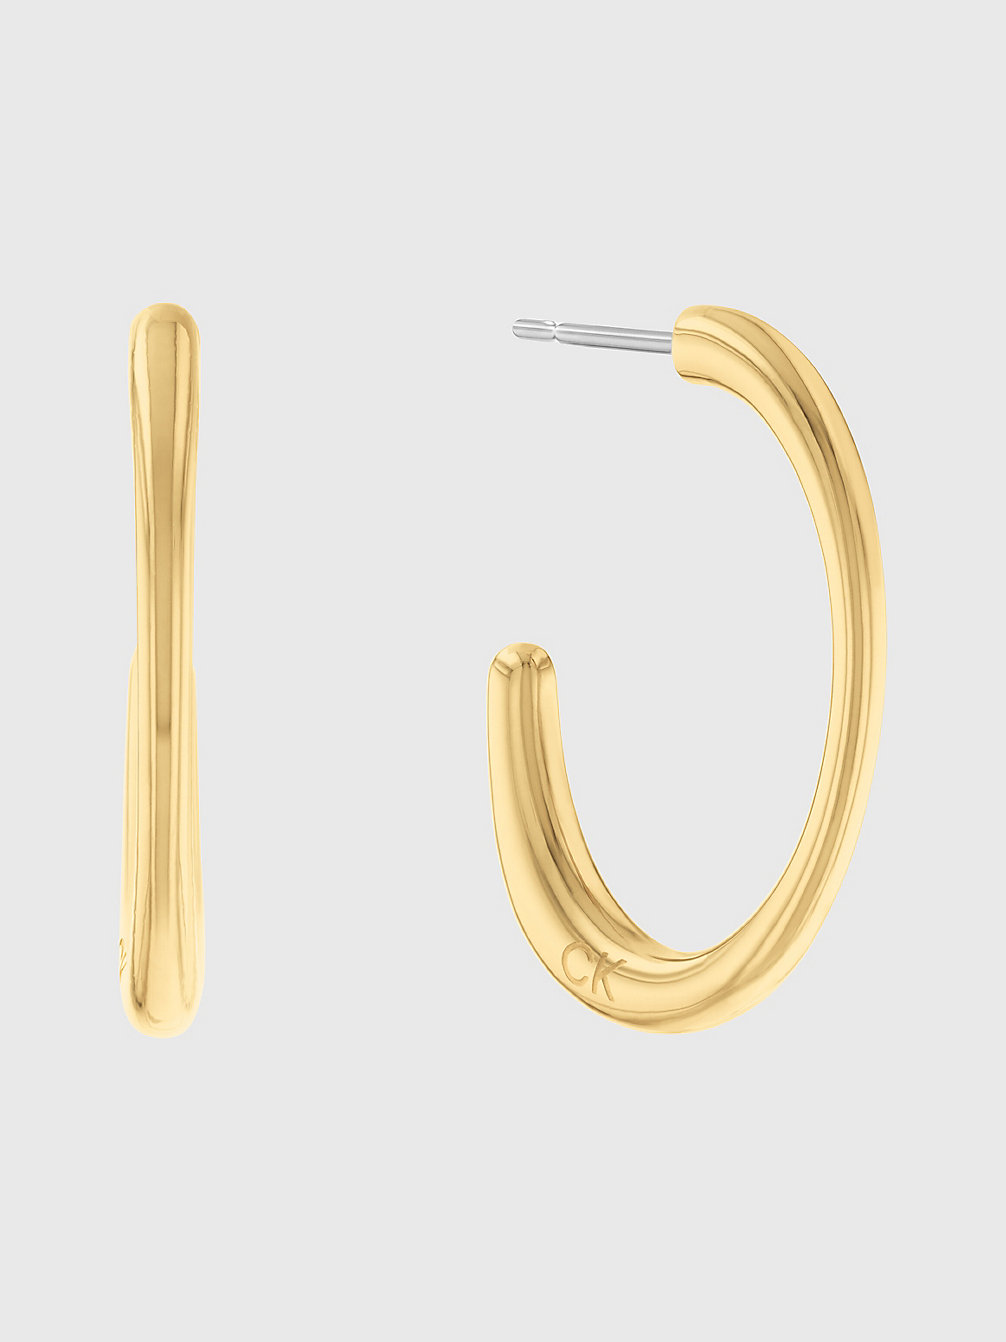 GOLD Earrings - Playful Organic Shapes undefined women Calvin Klein